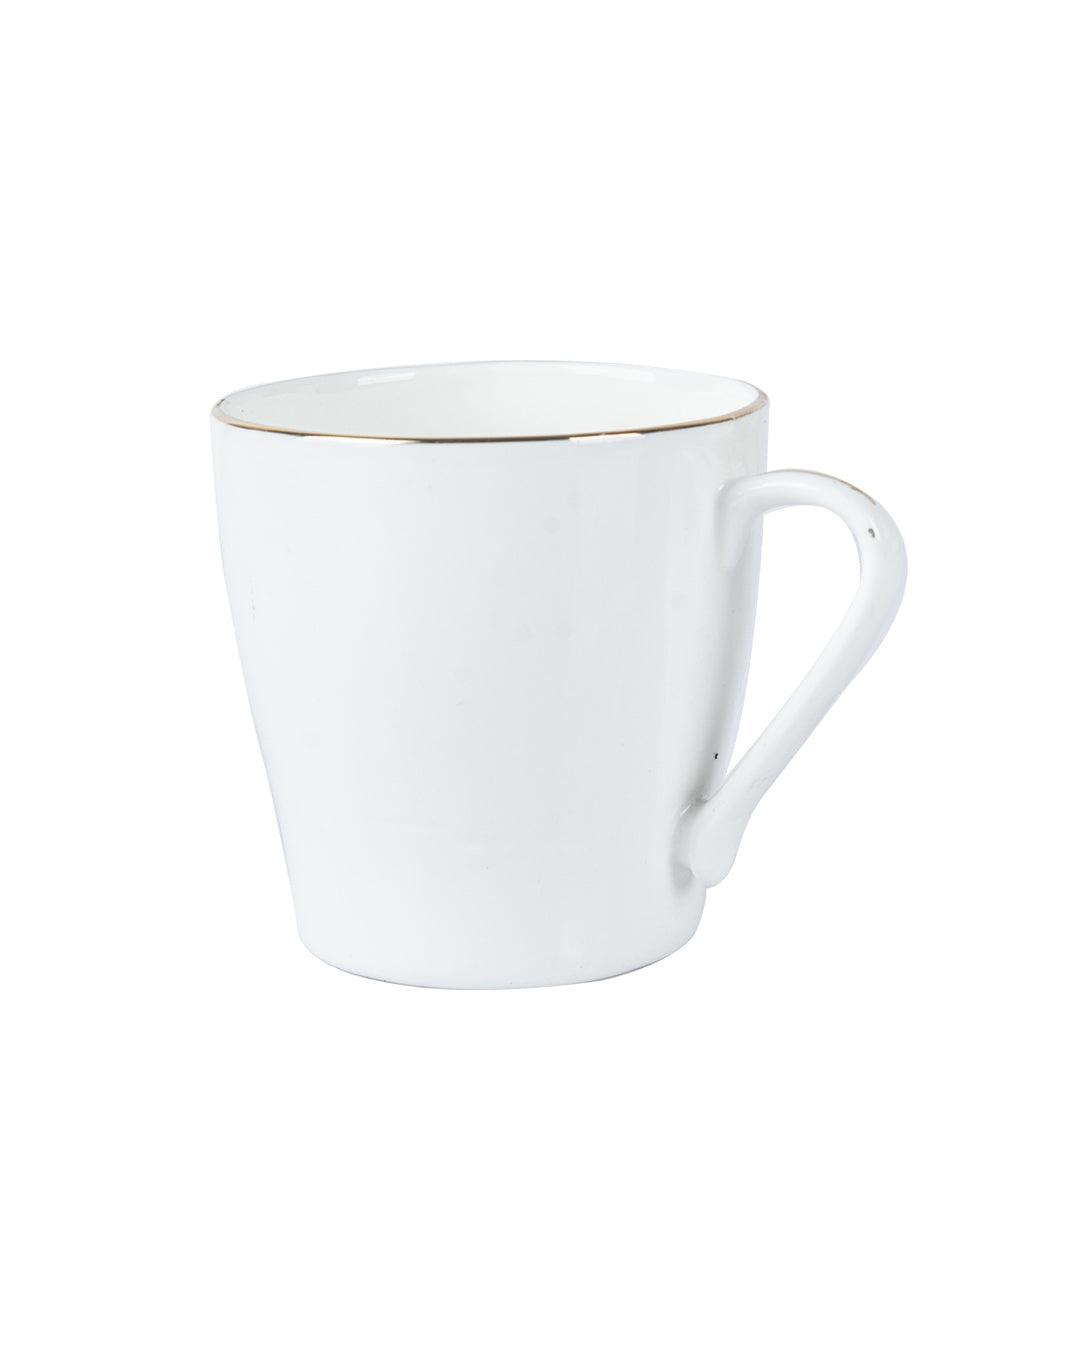 VIENNESE WALTZ DANCER' Print Tea & Coffee Mugs in Ceramic ( White & Black, Set Of 6, Each 200 mL) - MARKET 99